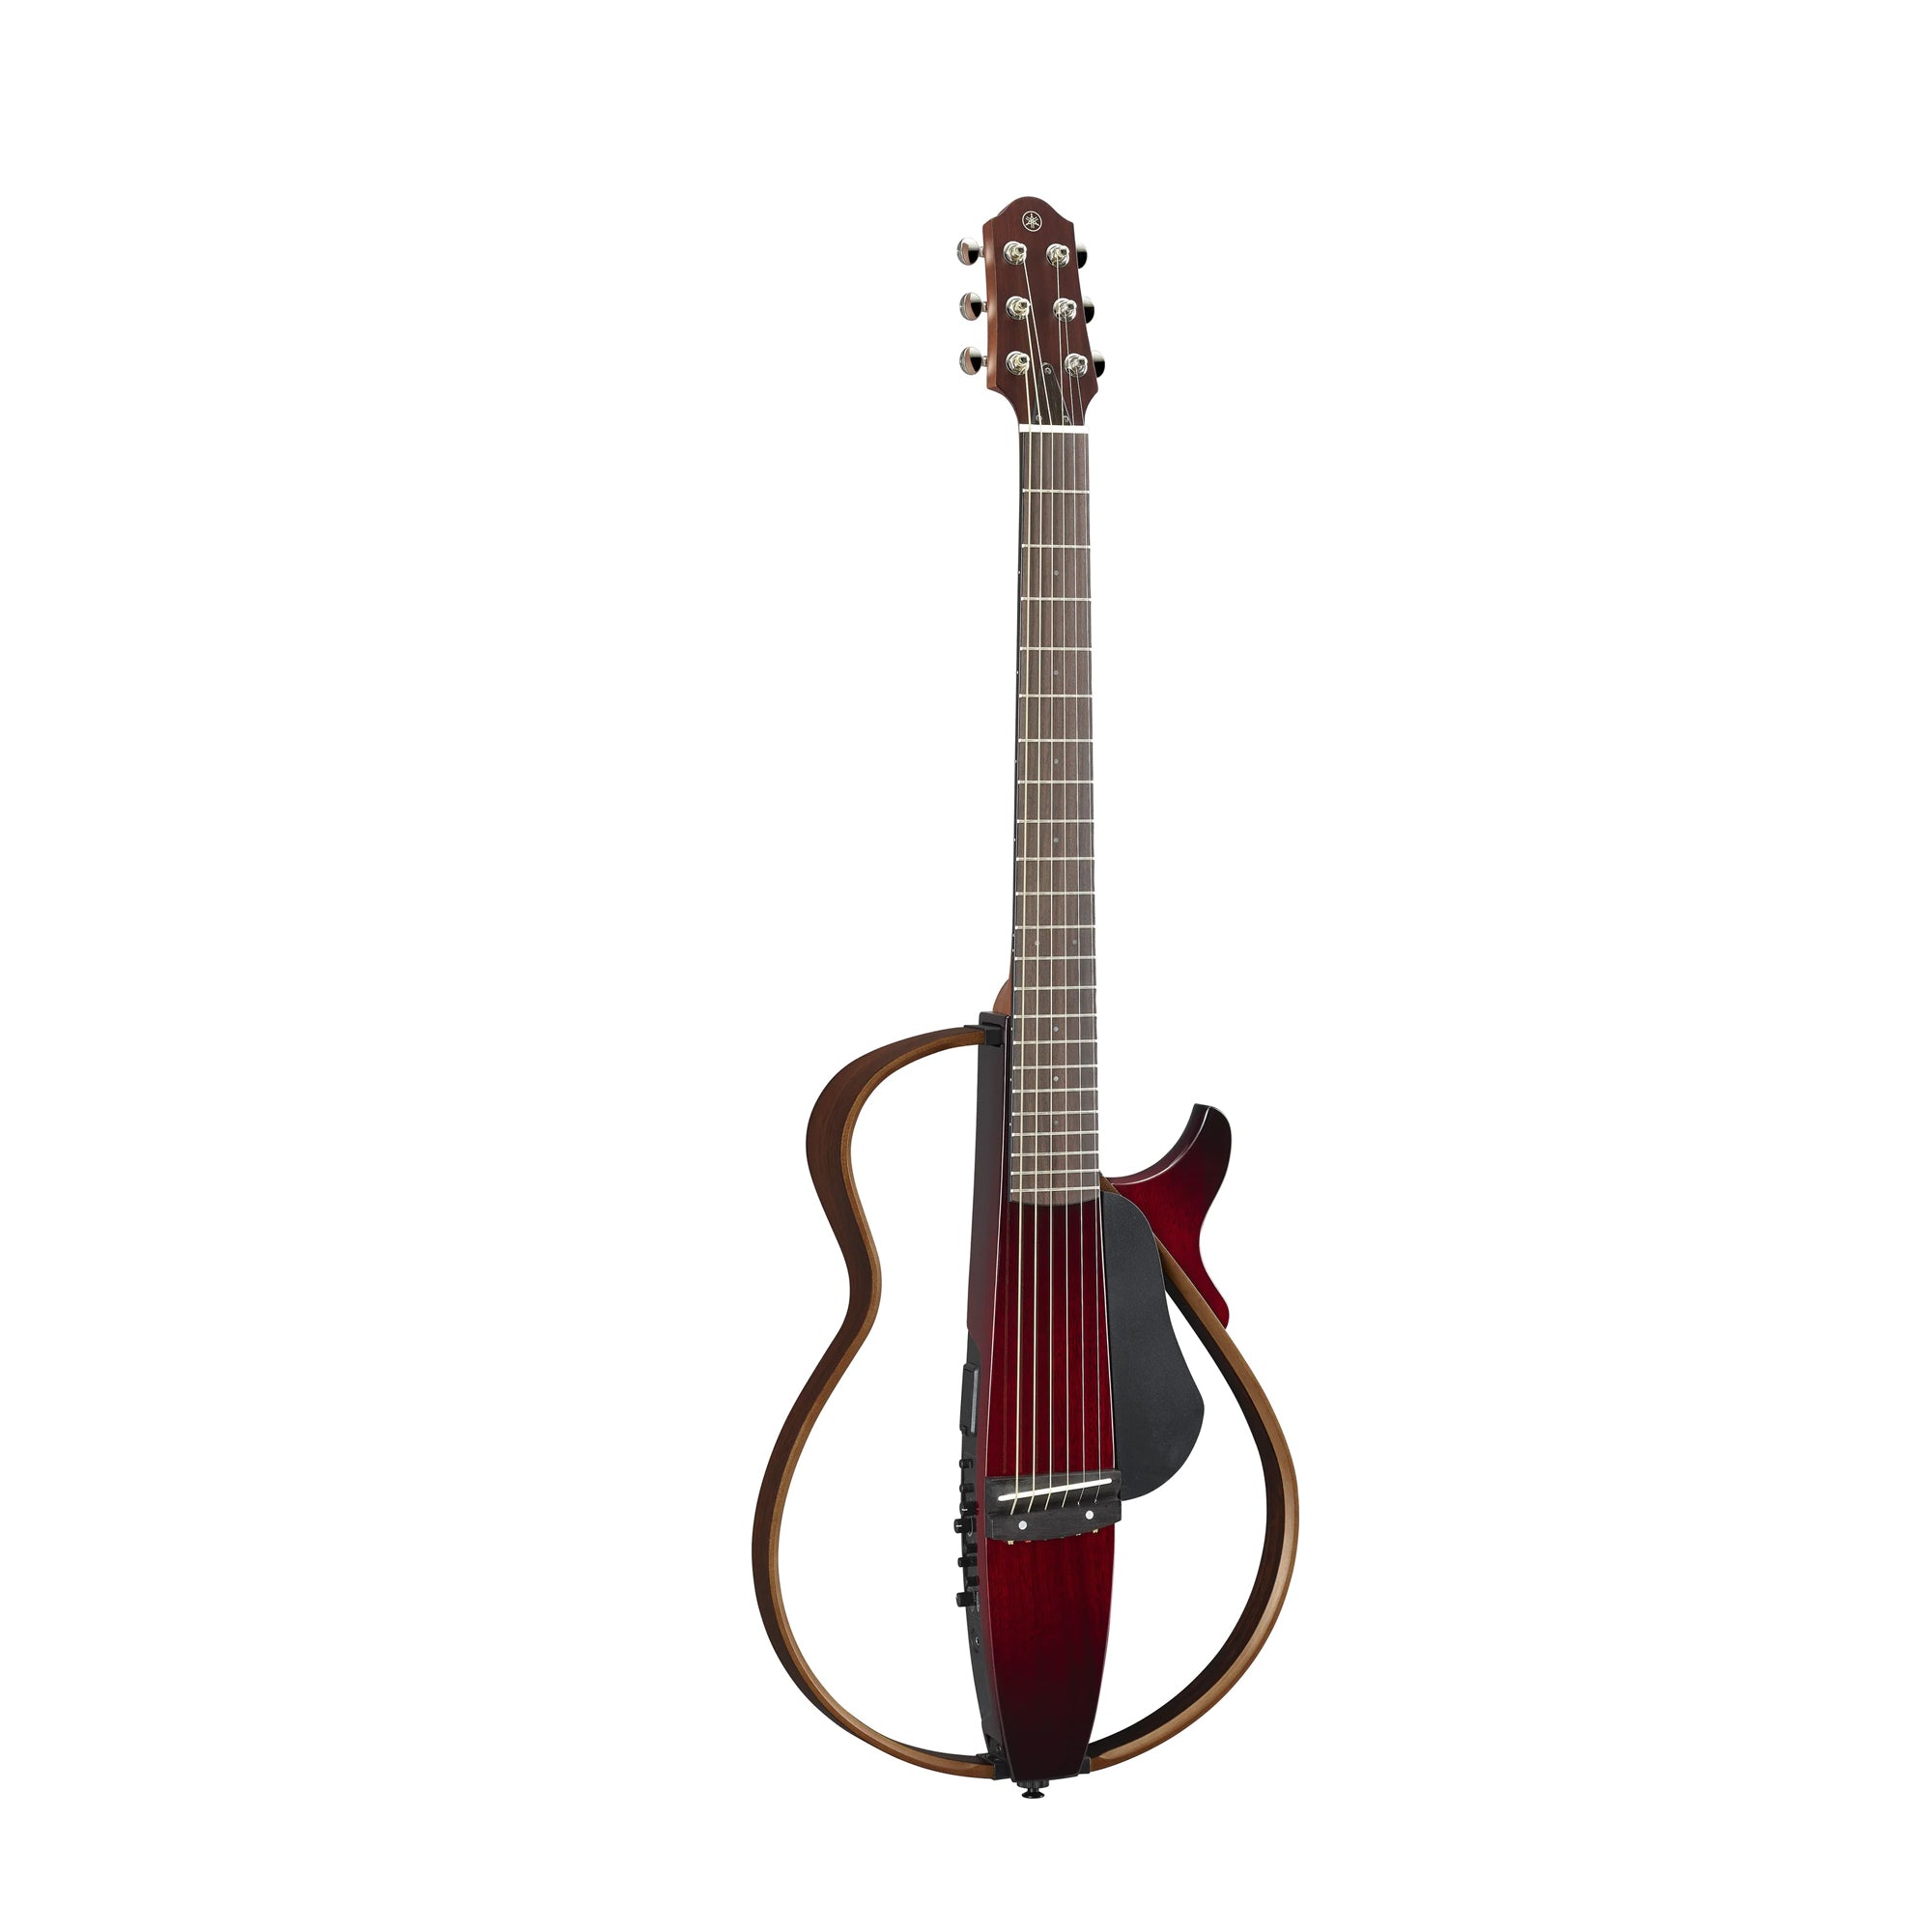 Yamaha SLG200S Steel String Silent Guitar